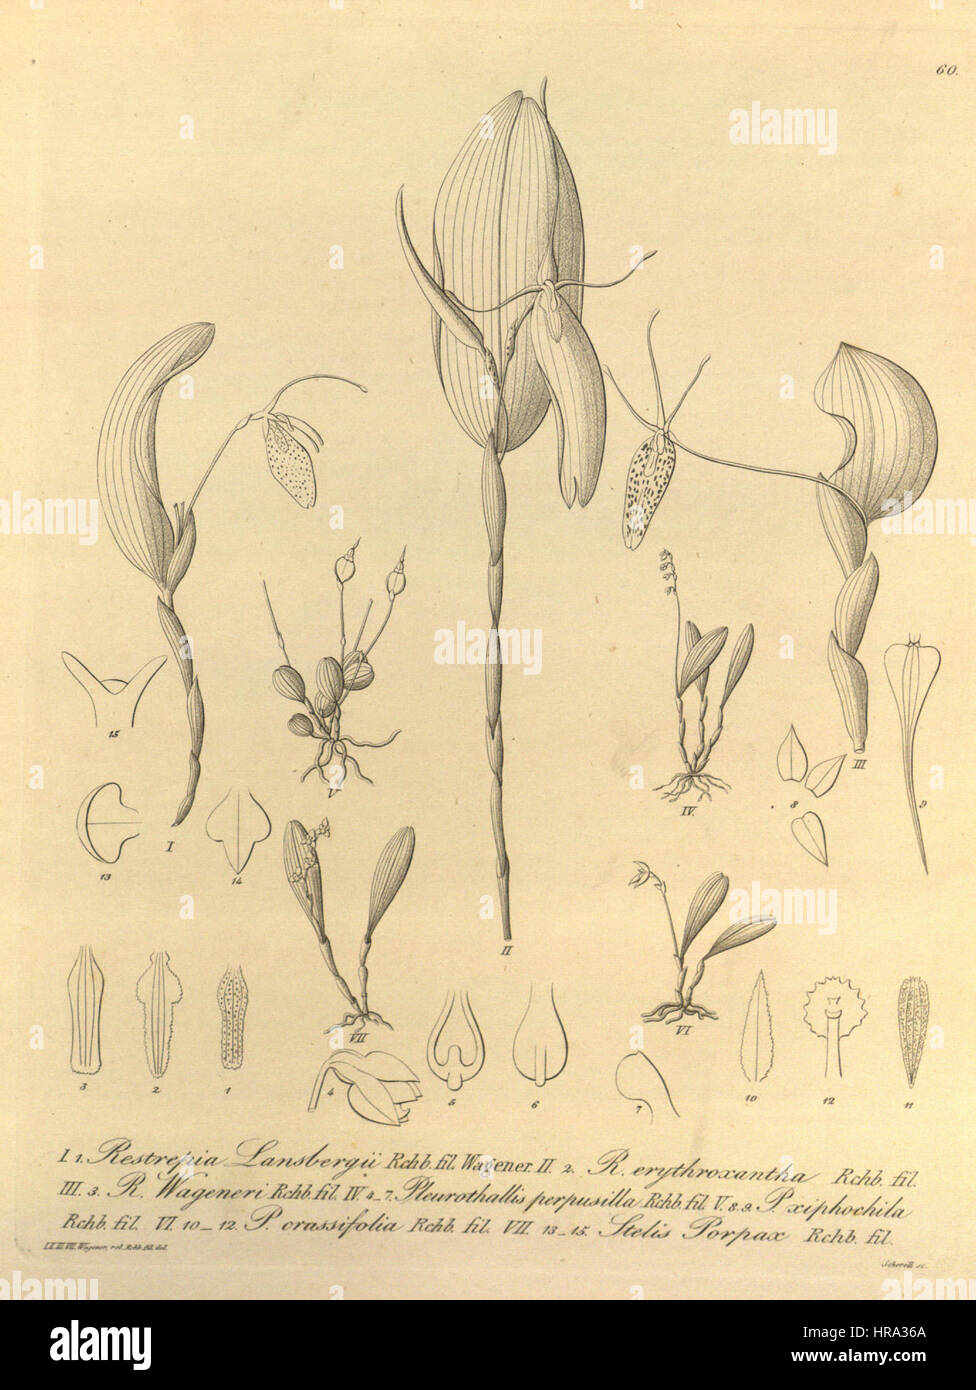 Restrepia lansbergii-R. elegans-R. wageneri-Platystele perpusilla-Trichosalpinx xiphochila-Anathallis minutalis-Stelis porpax - Xenia 1-60 (1858) Stock Photo